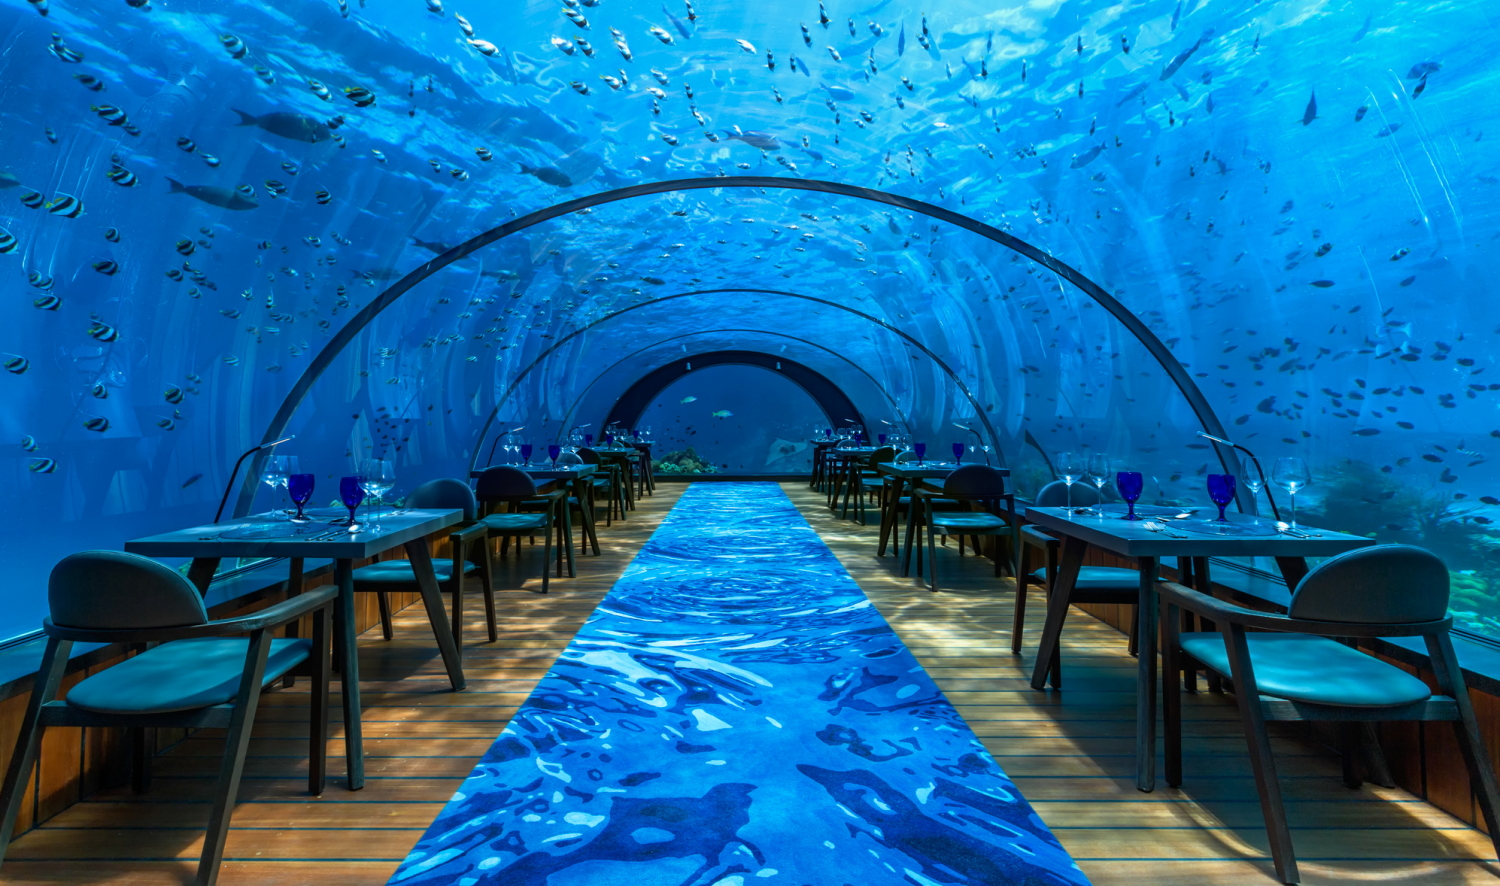 Maldives: Hurawalhi Island Resort's under sea restaurant